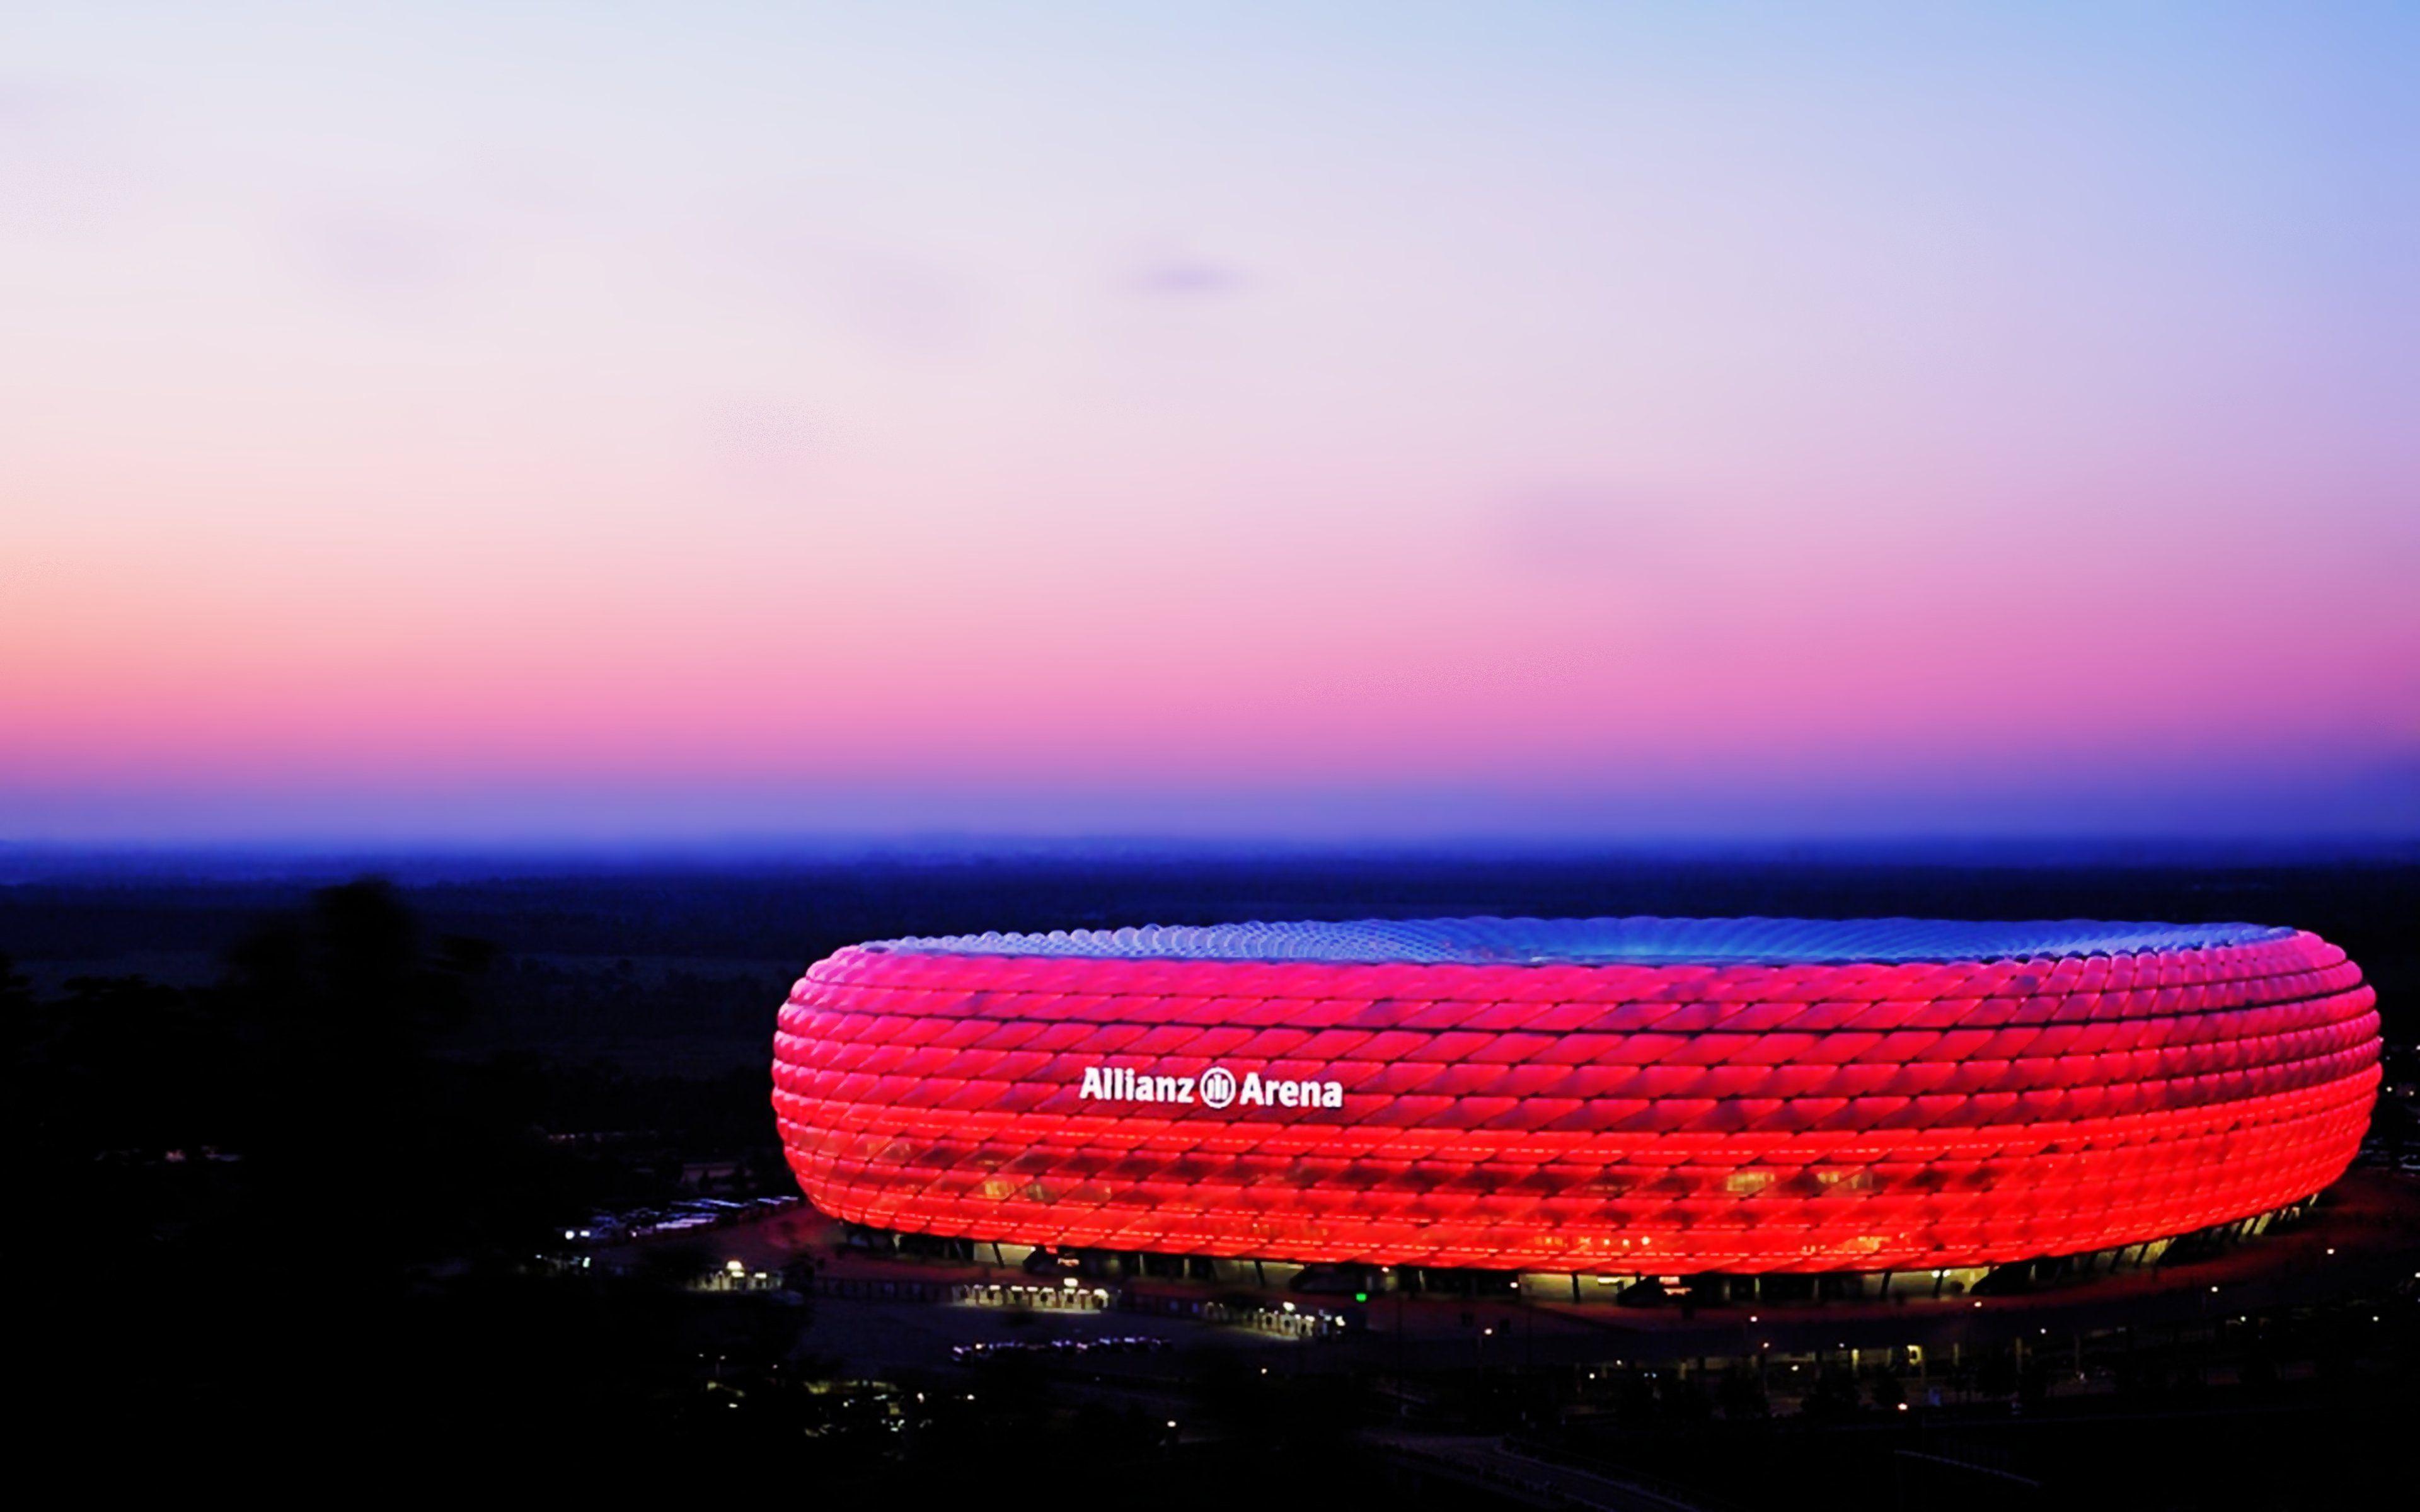 Bayern Munich Allianz Arena Wallpaper Full HD For Free Wallpaper